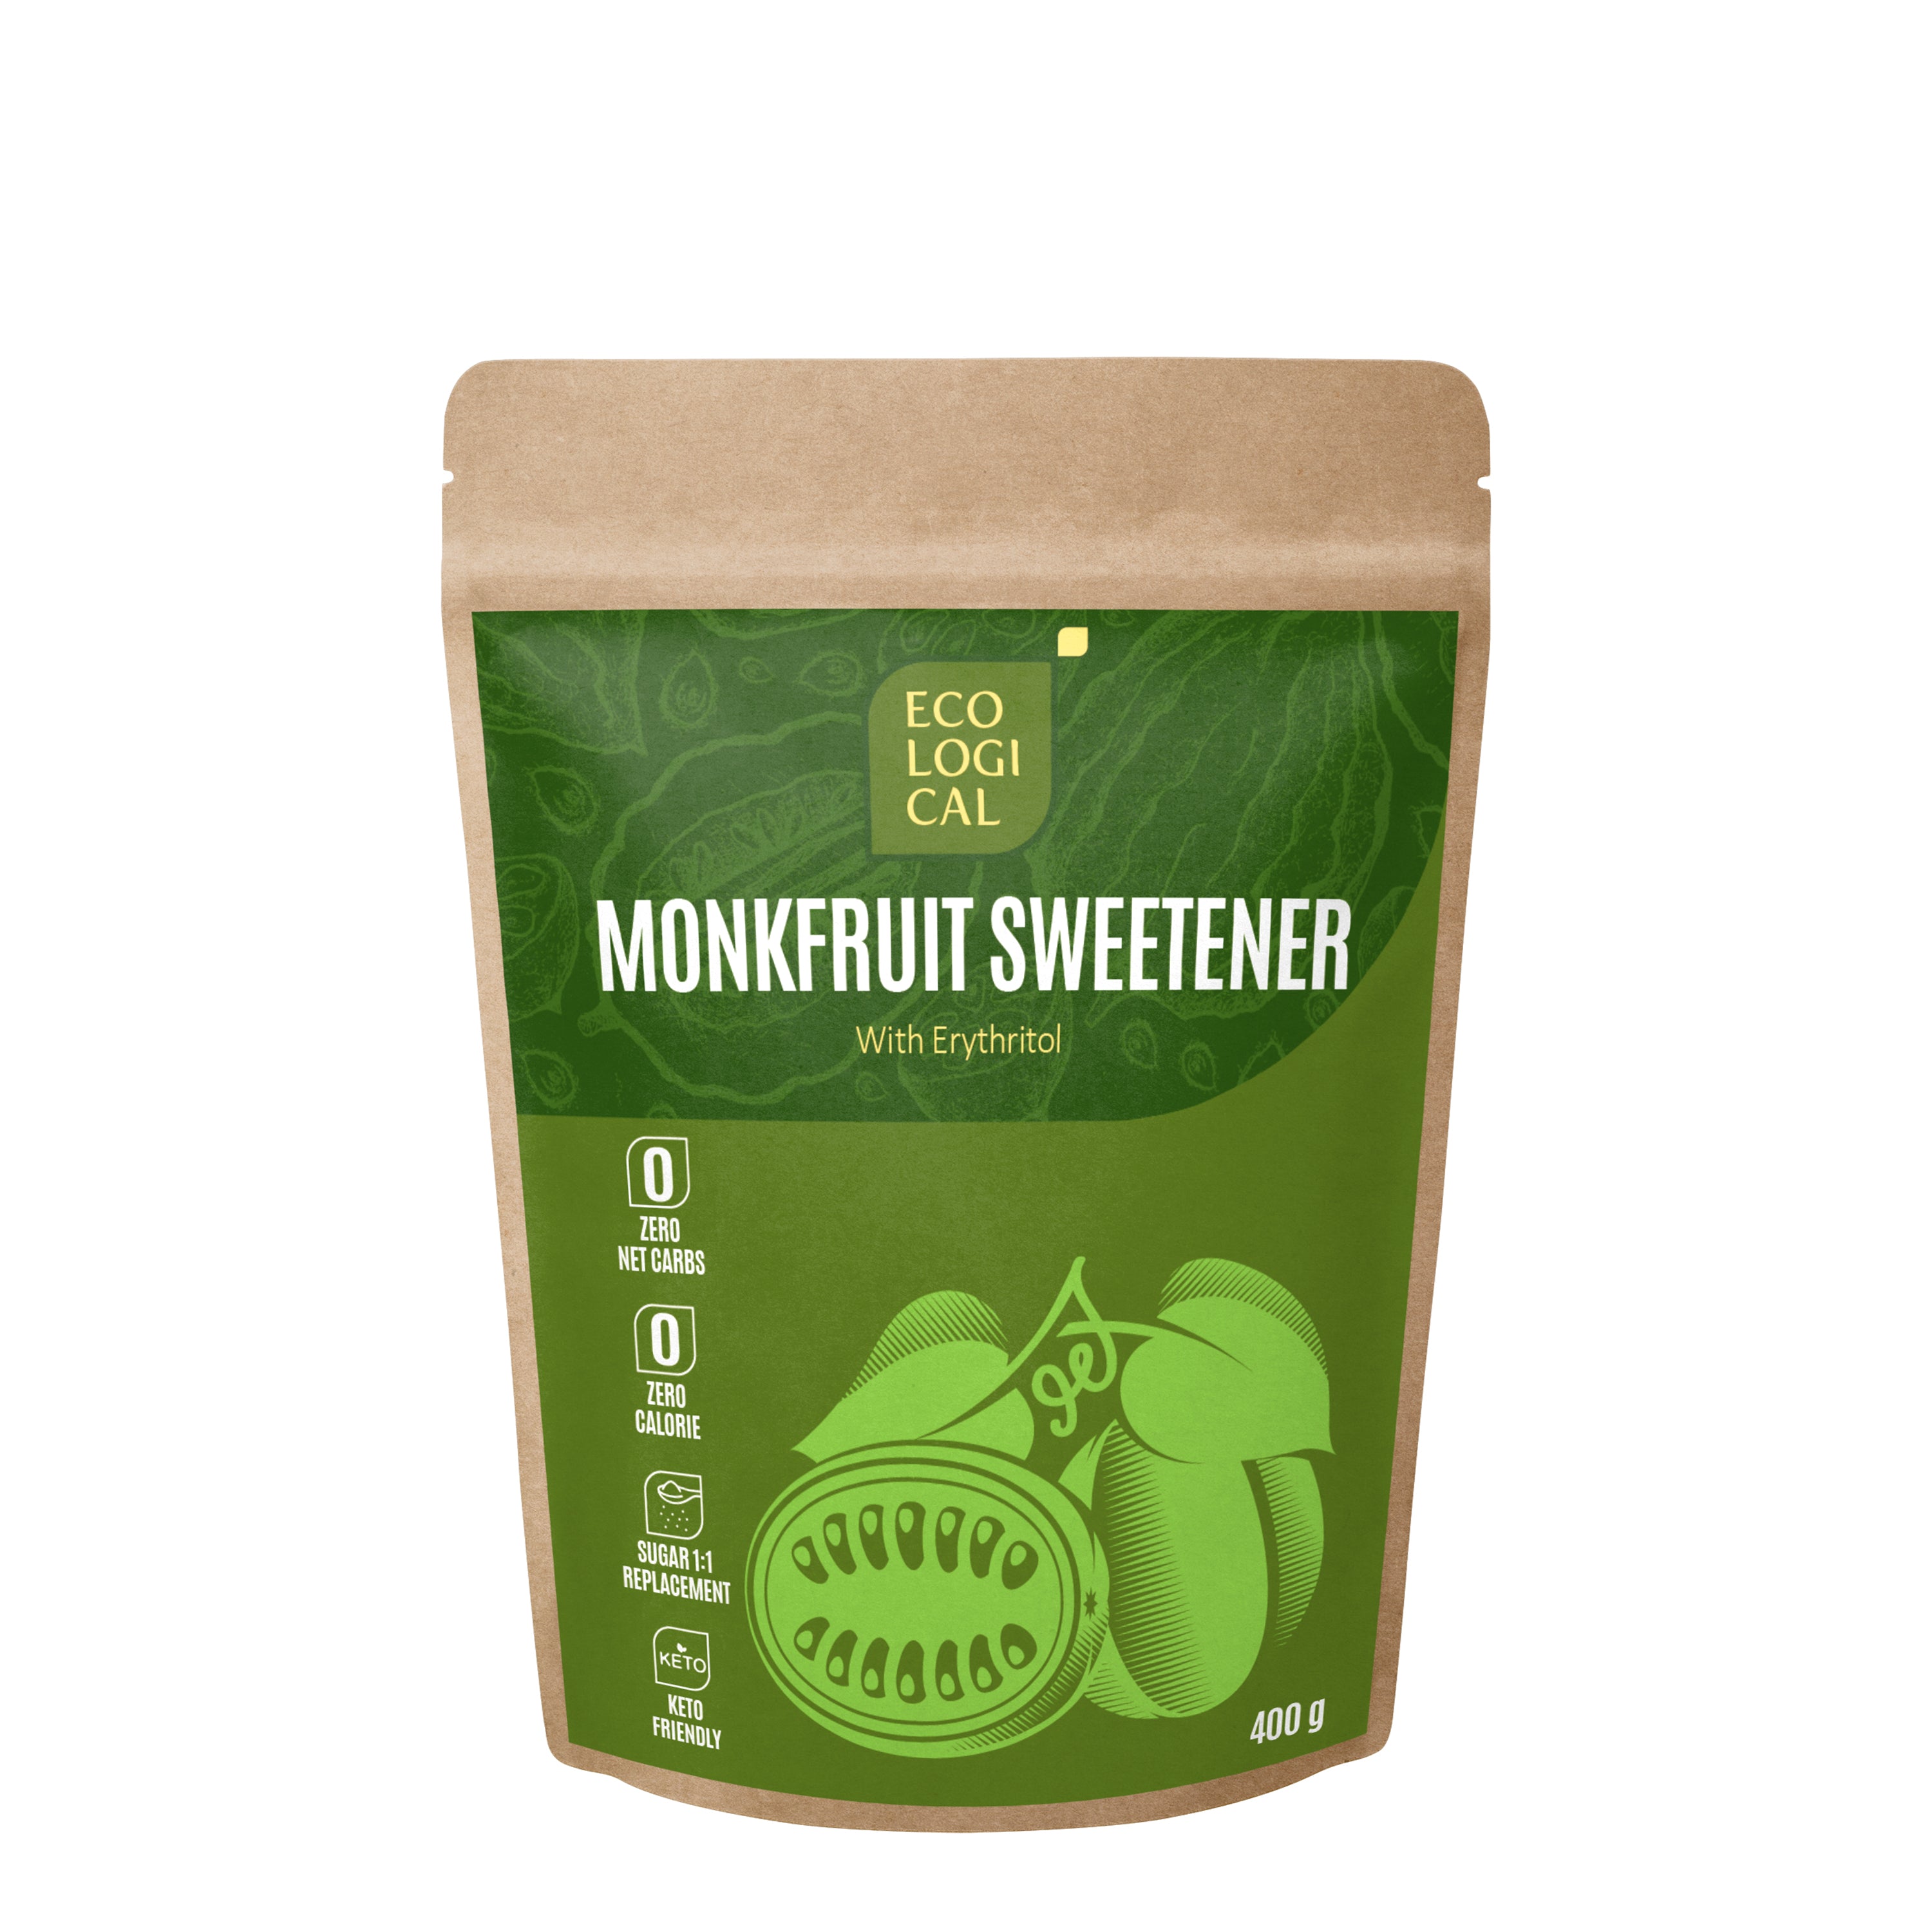 ECOLOGICAL Monk Fruit Sweetener, 400g - With Erythritol